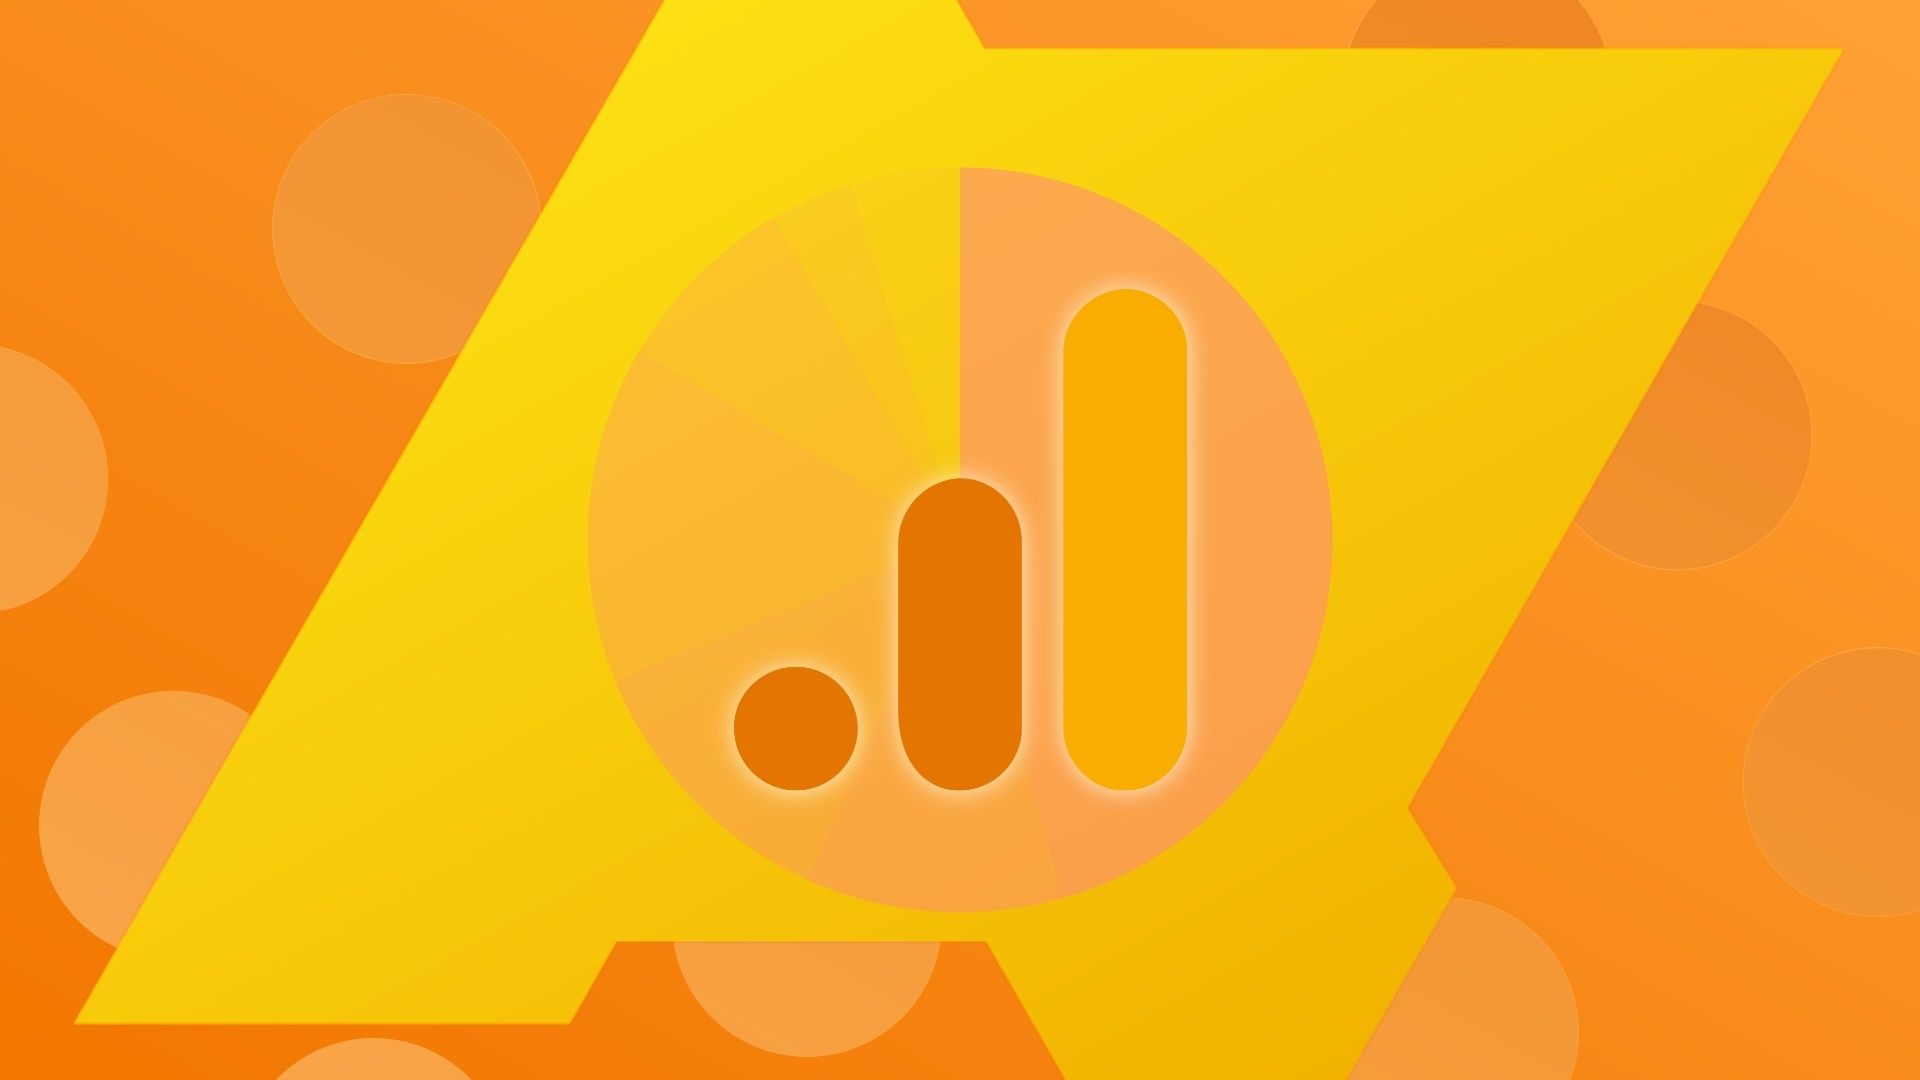 The Google Analytics logo